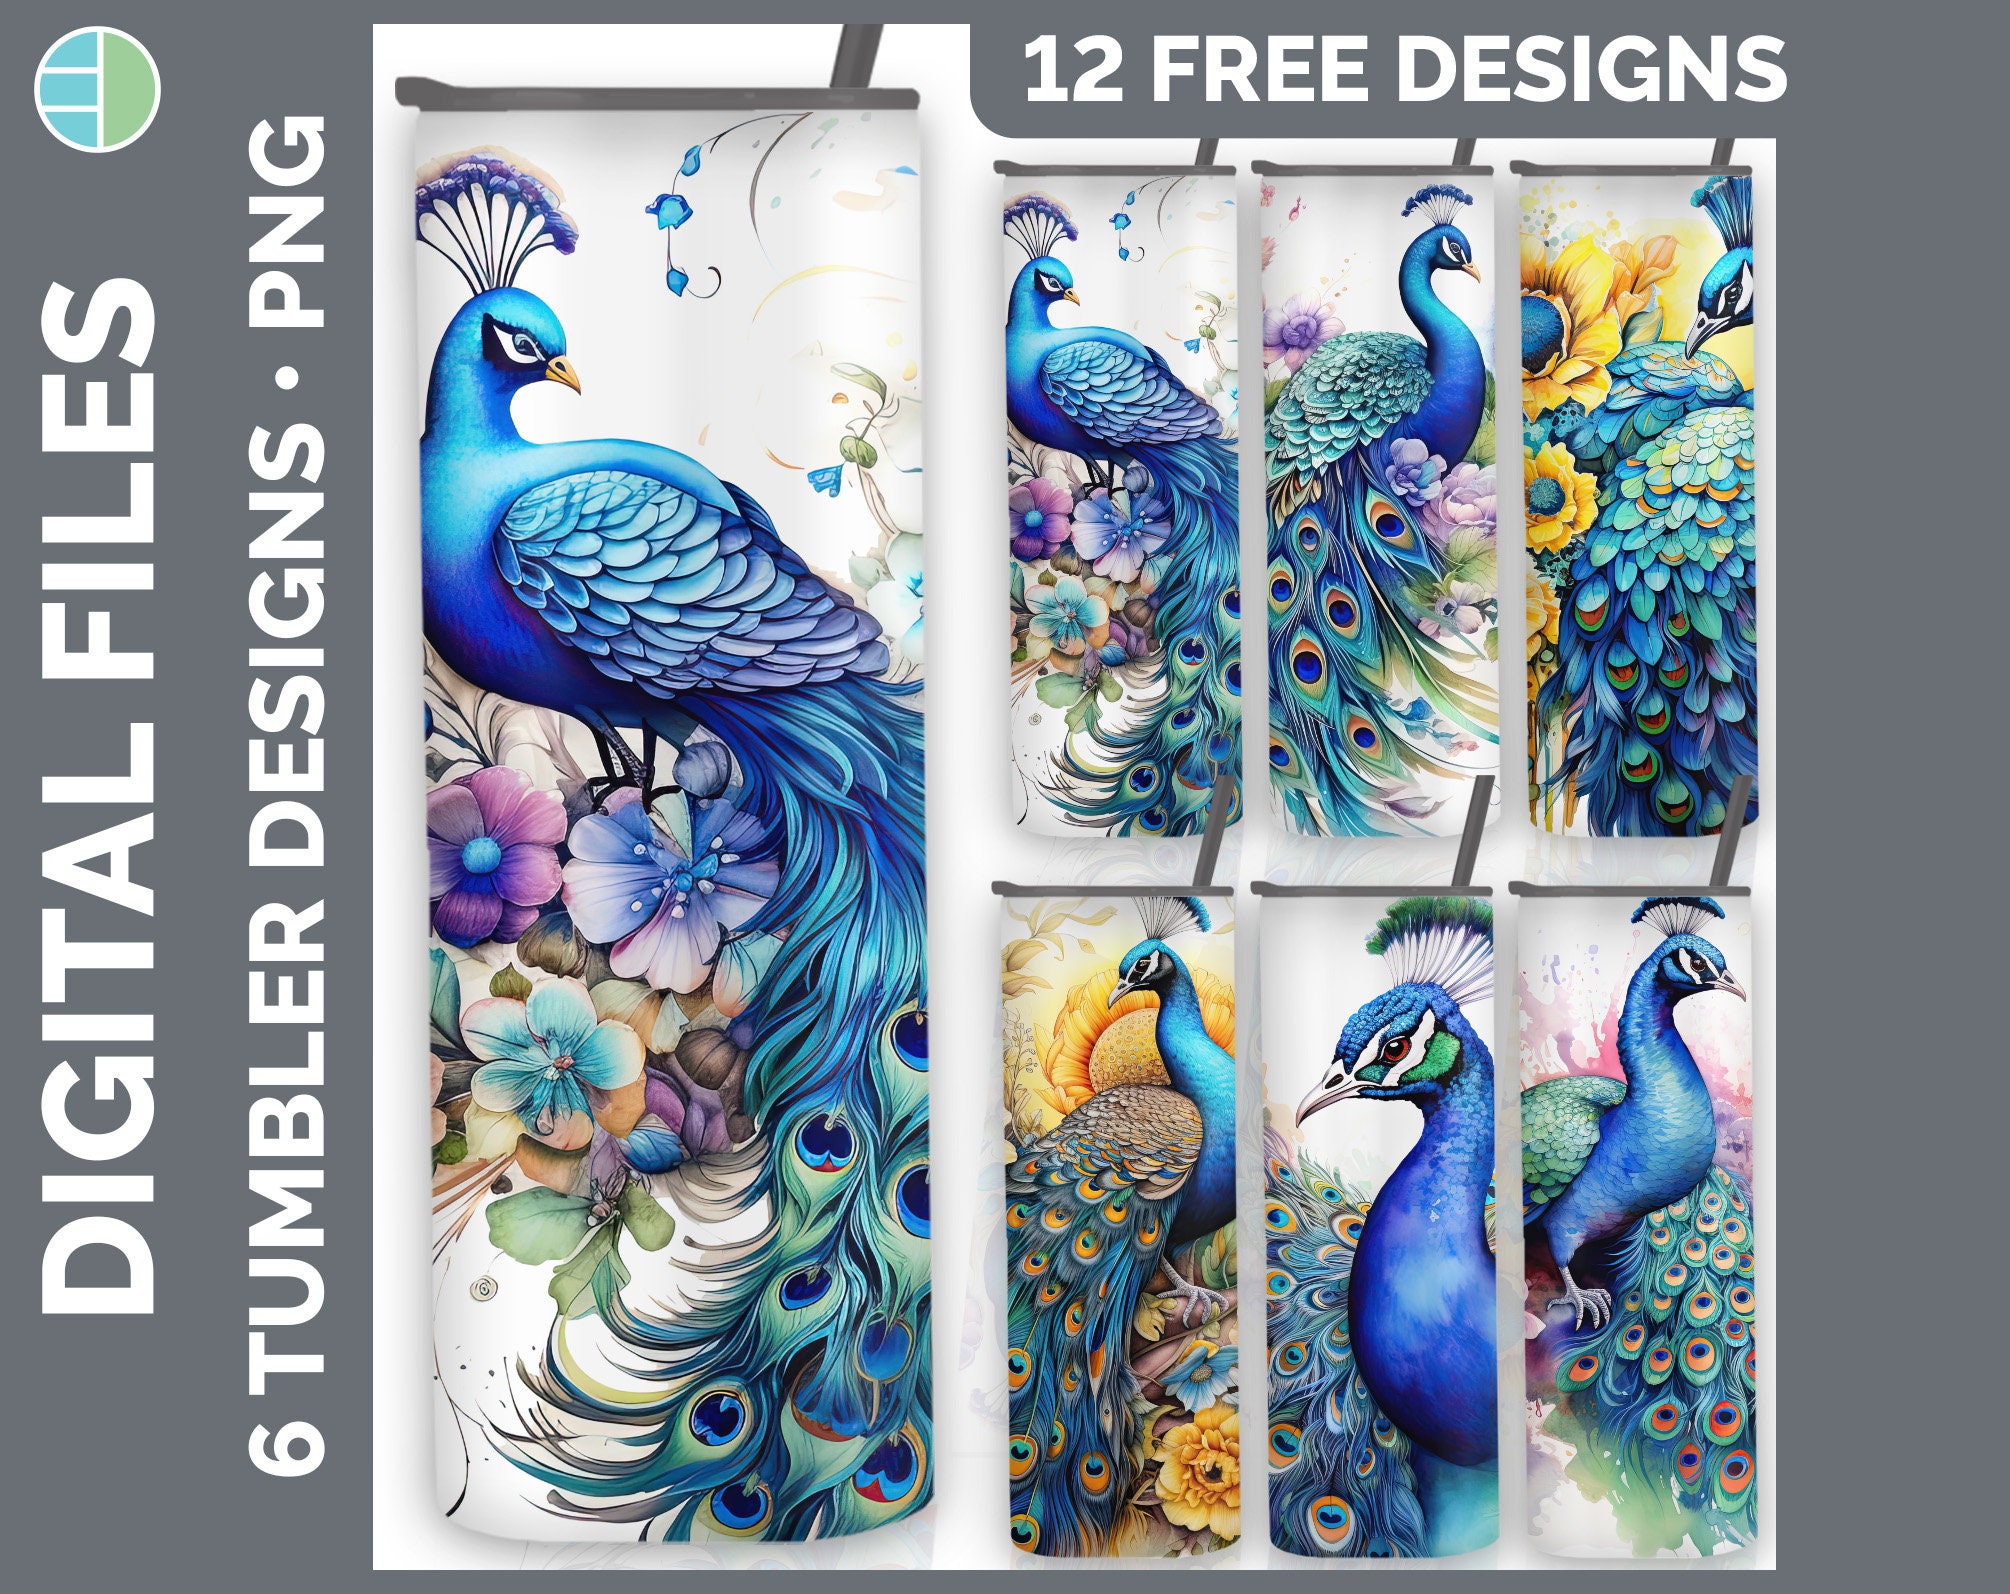 40 Unique Peacock Feather Wall Decor Ideas